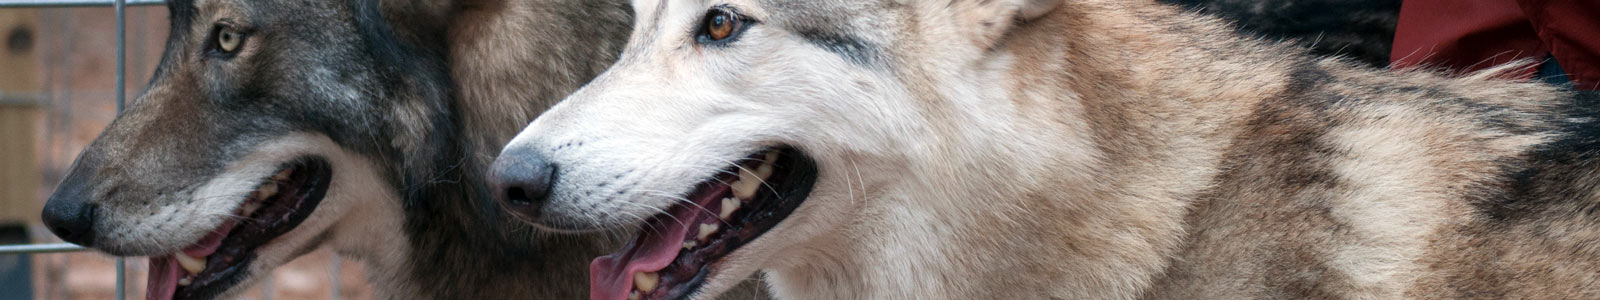 Texas Wolfdog Project Adoptable Animals Header Image